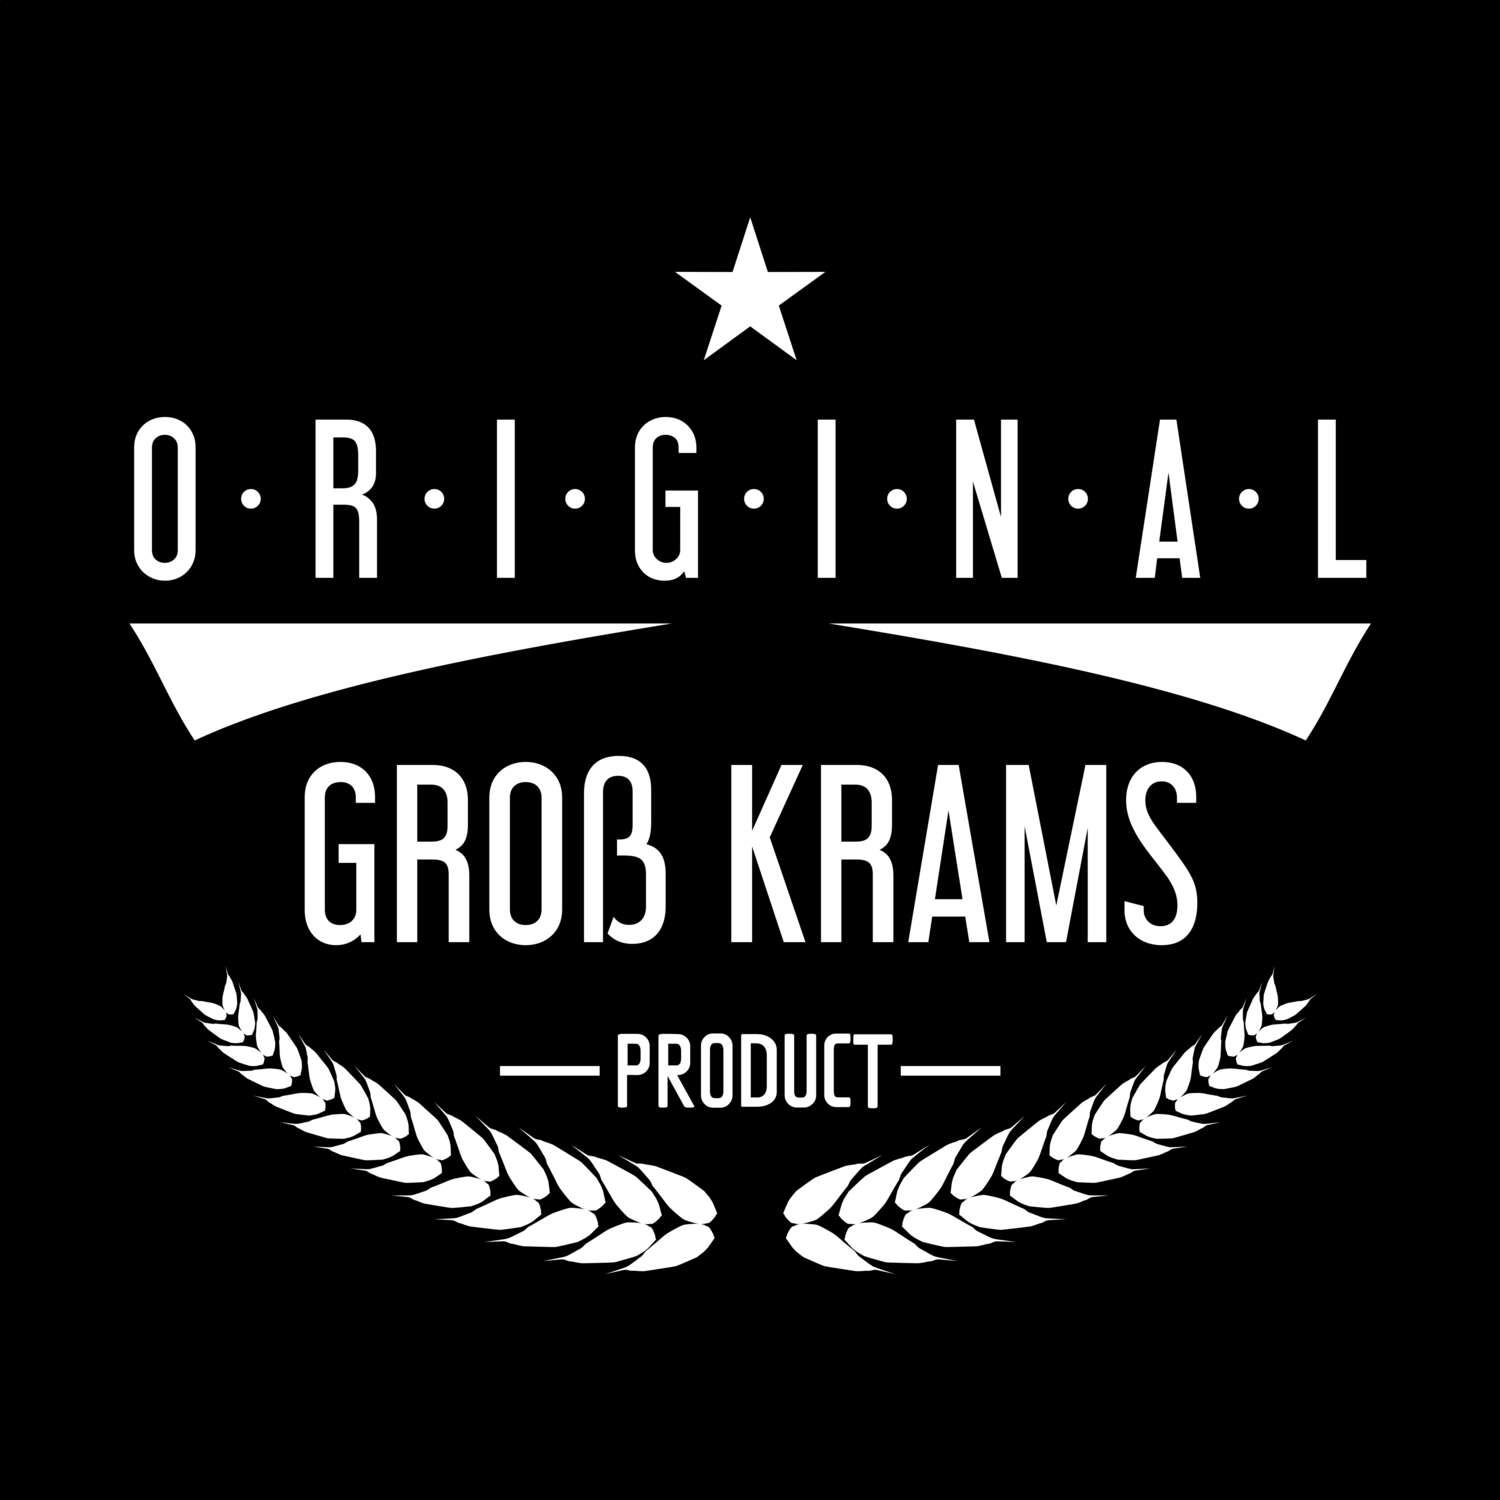 Groß Krams T-Shirt »Original Product«